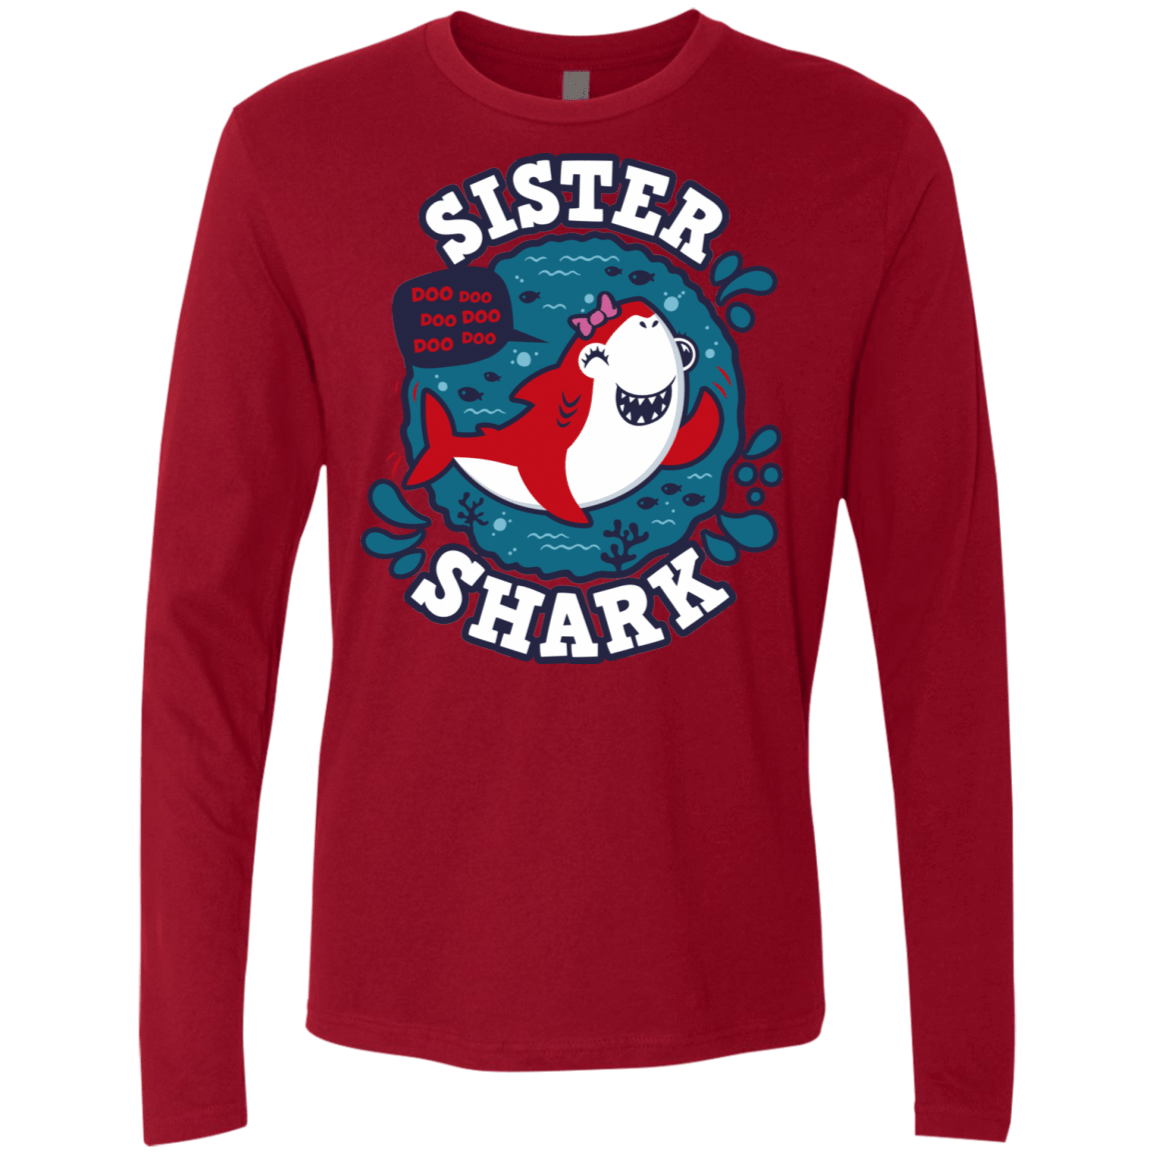 T-Shirts Cardinal / S Shark Family trazo - Sister Men's Premium Long Sleeve